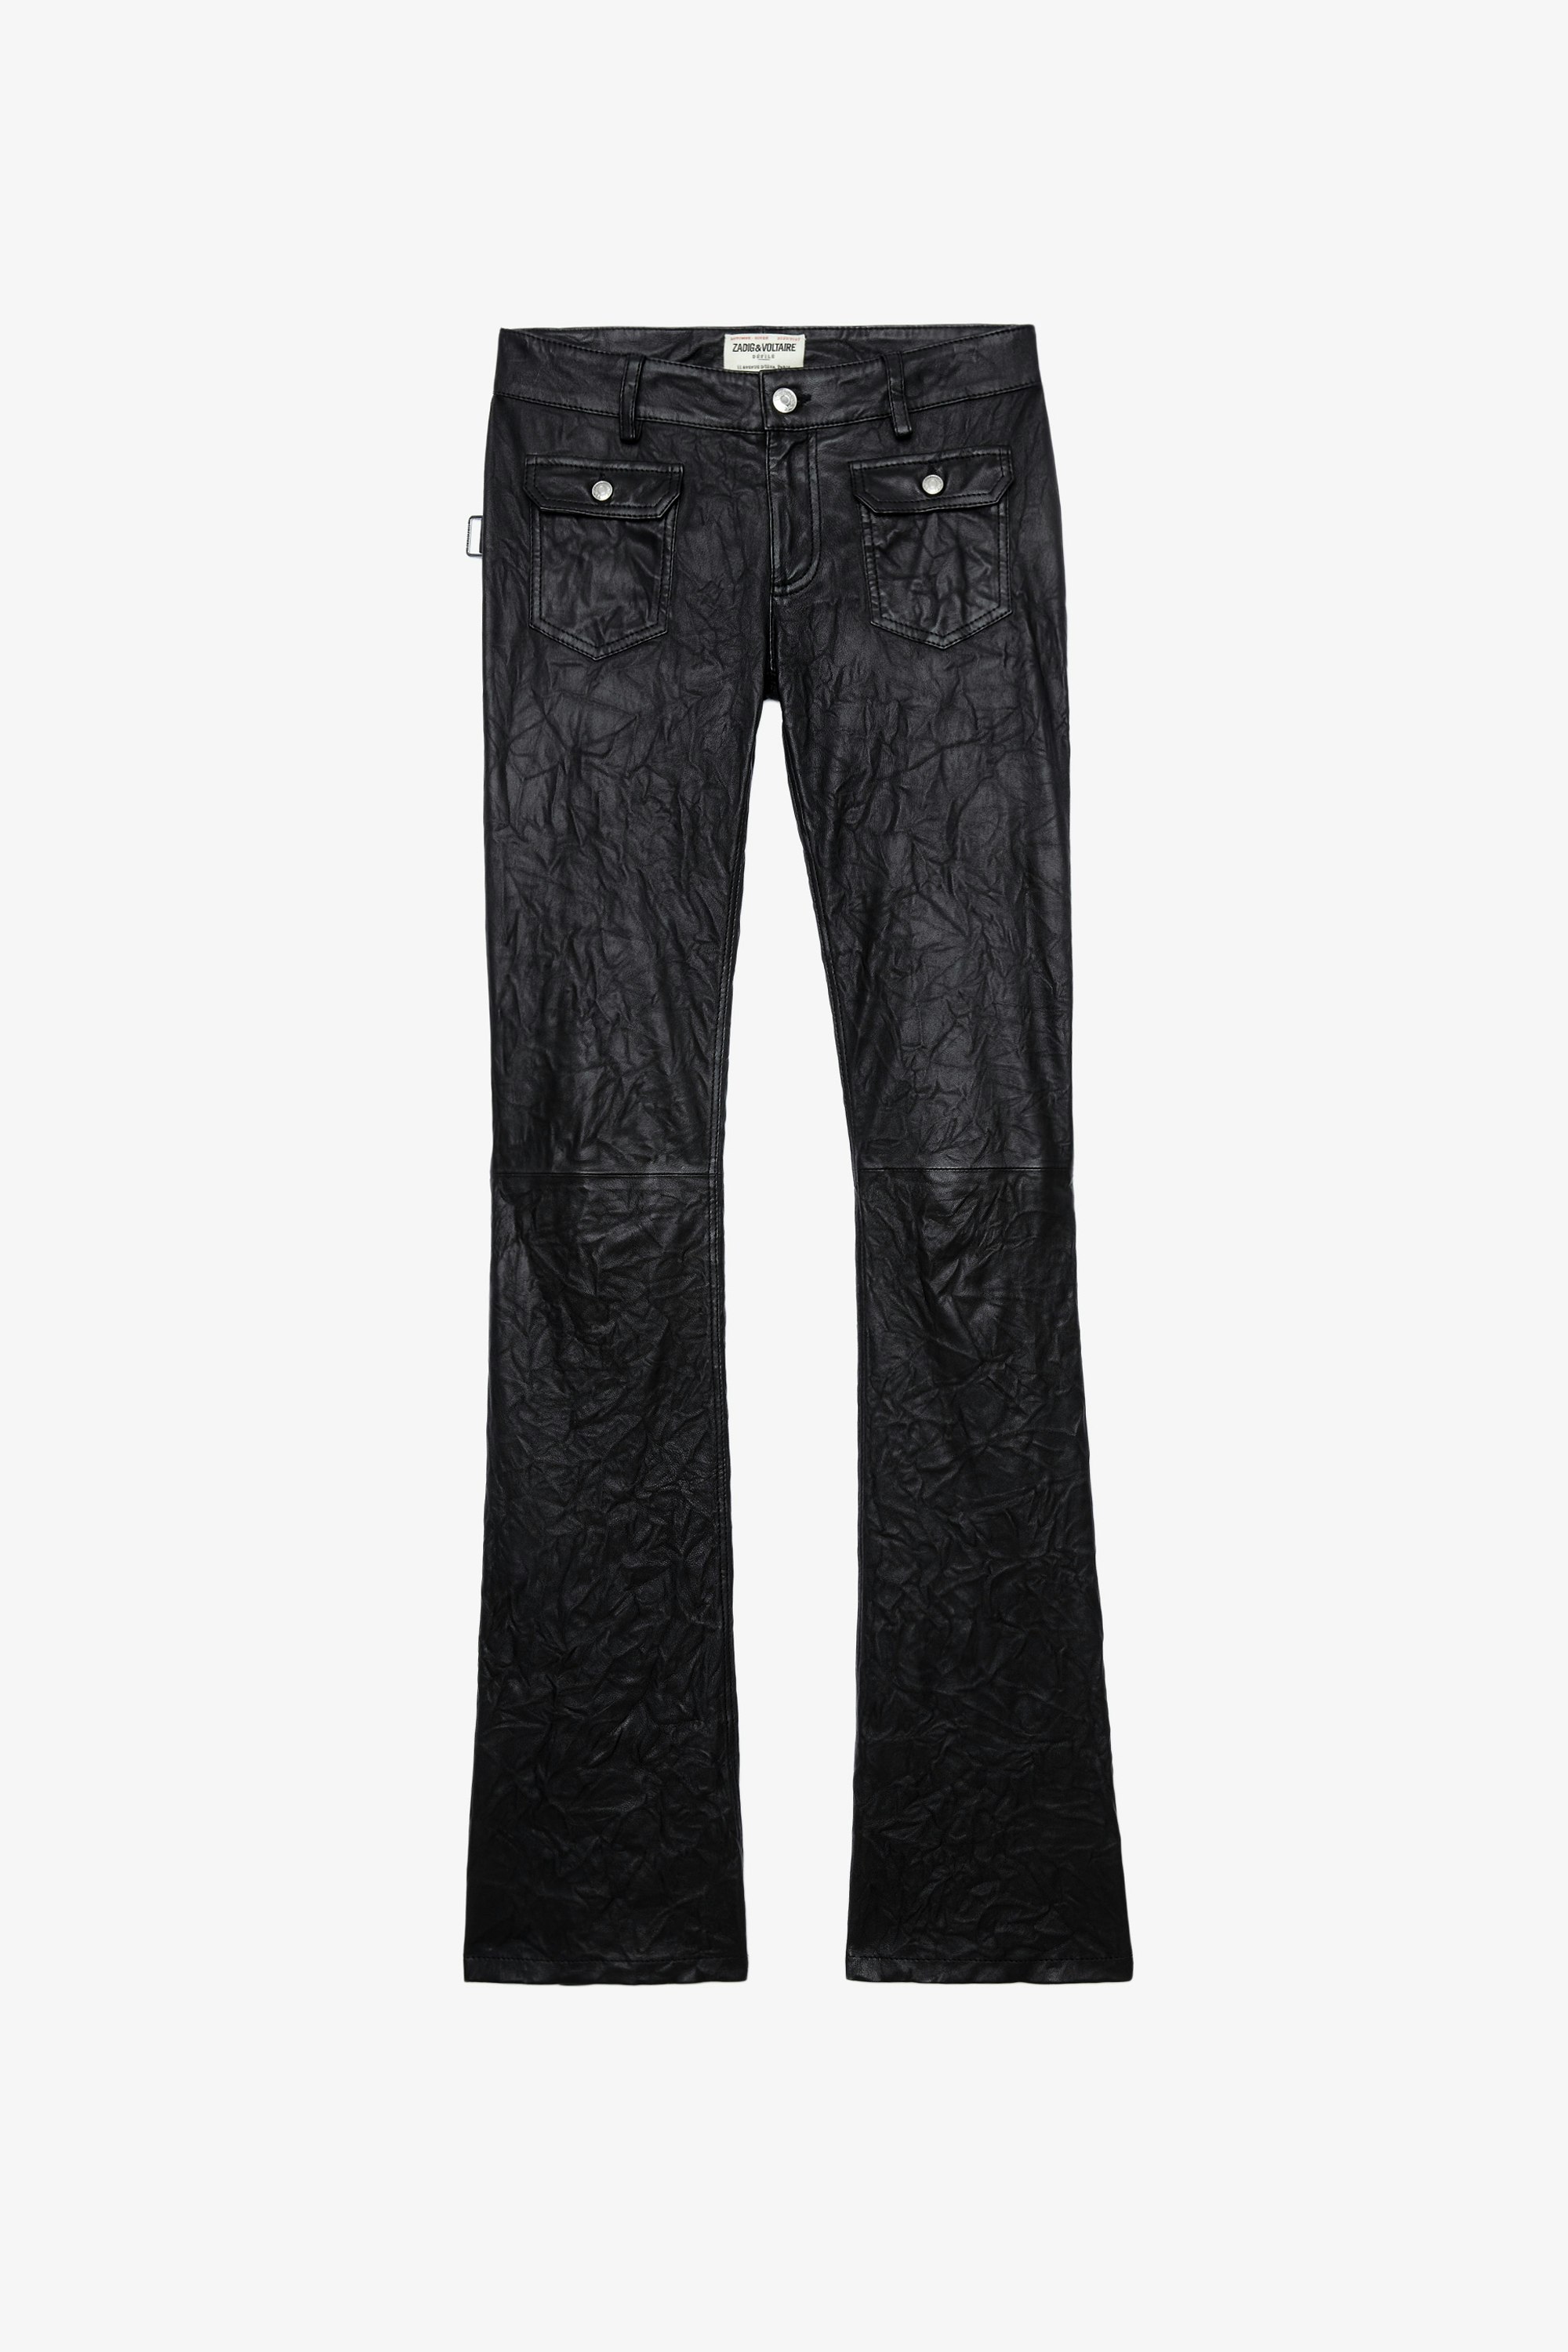 Hippie Creased レザー パンツ - Women's black creased leather trousers